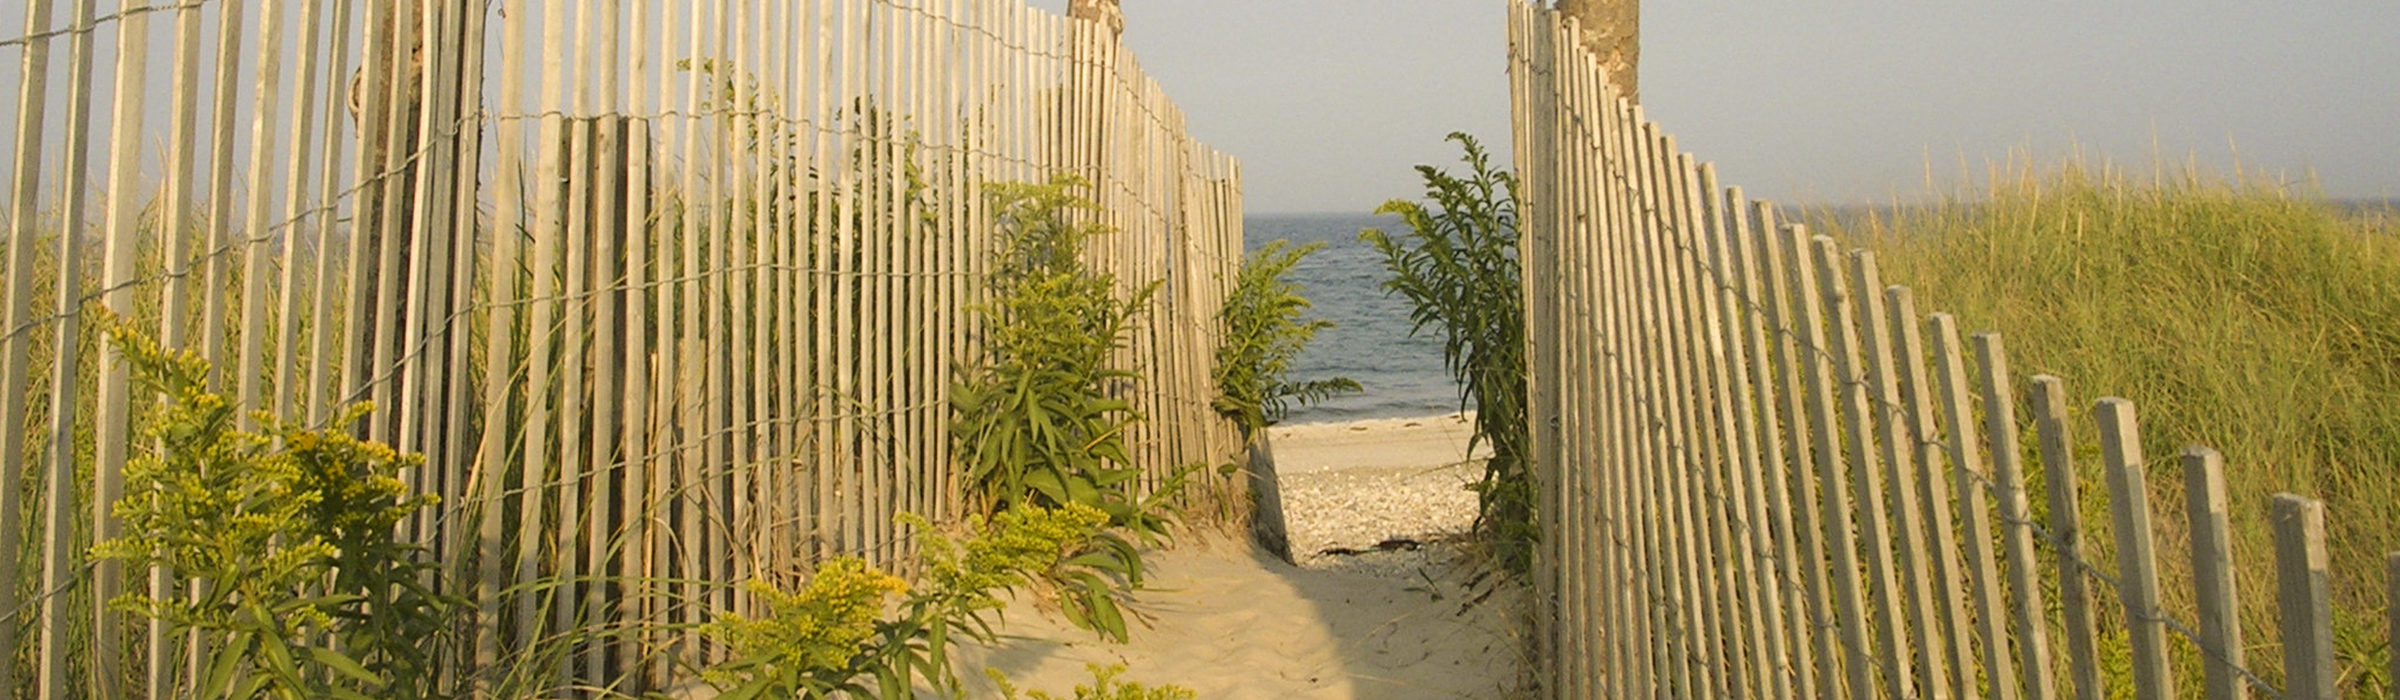 sandy walkway to the ocean